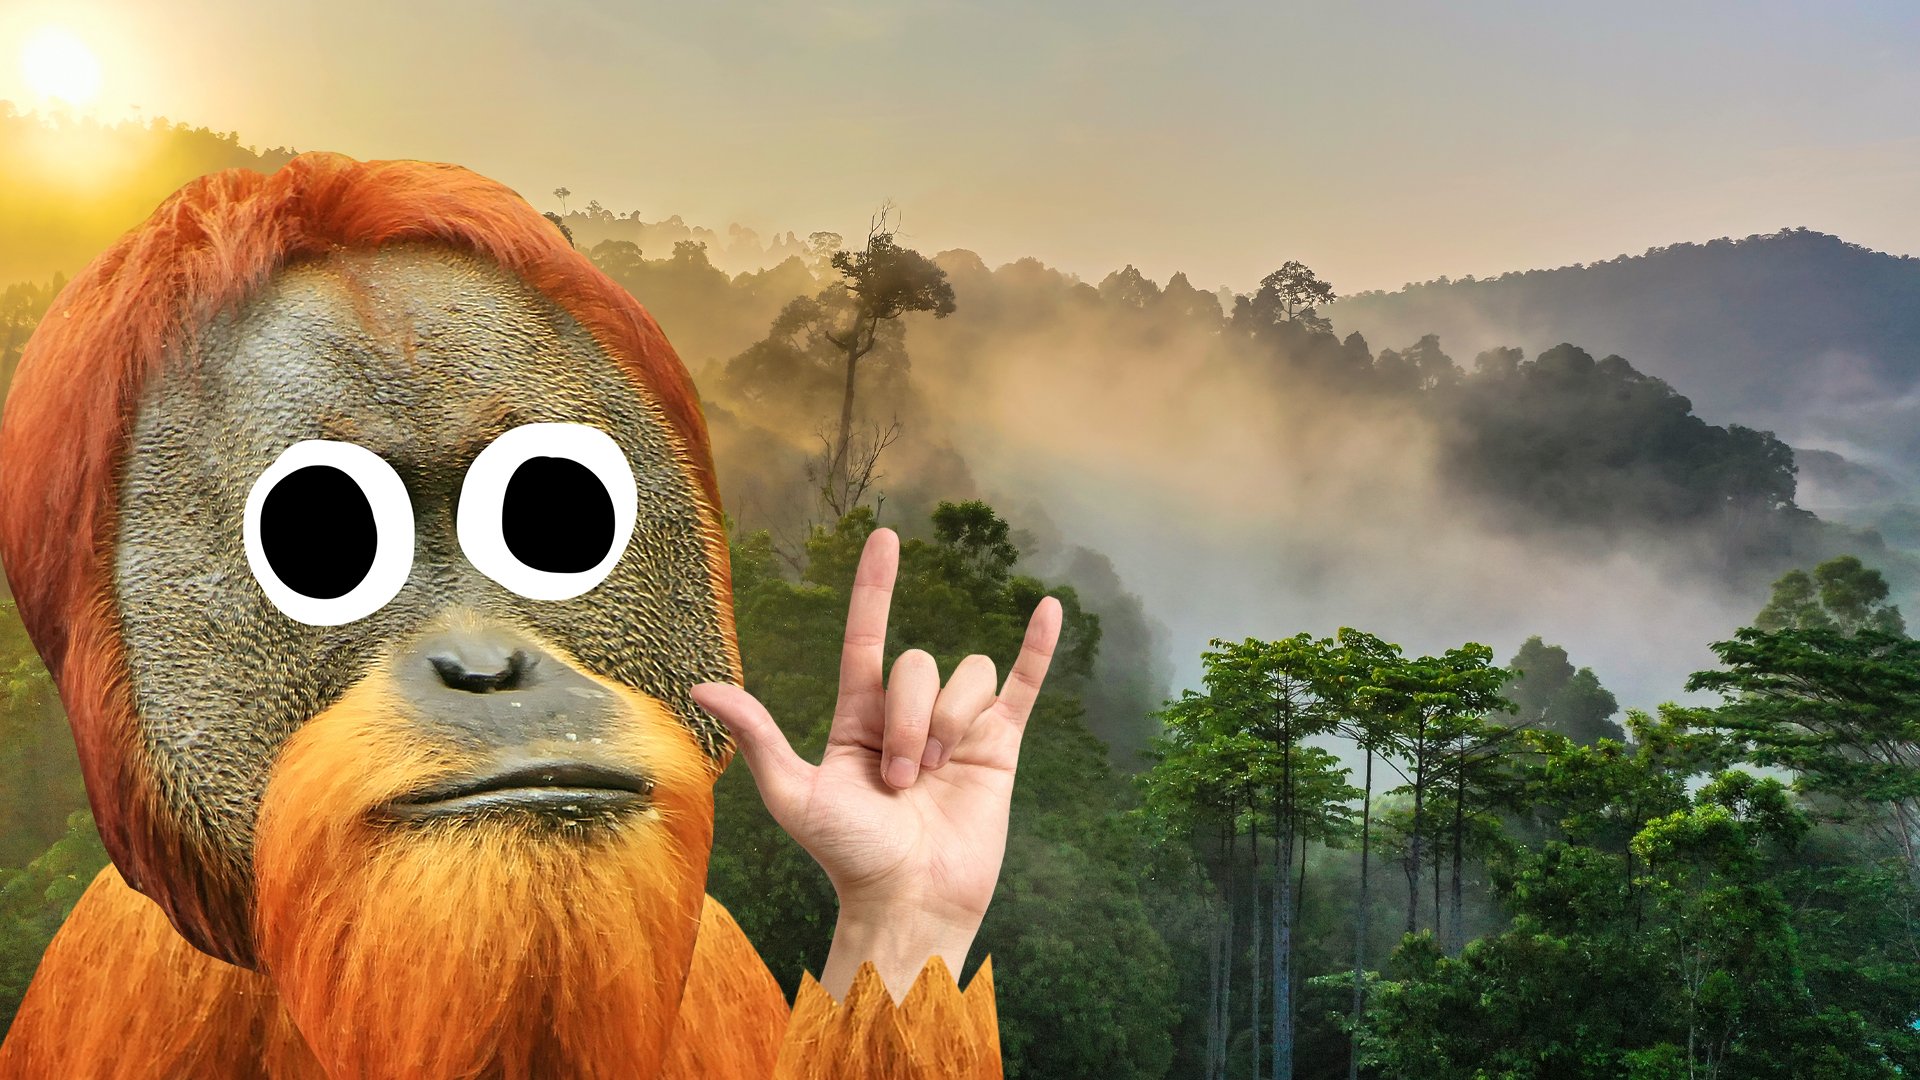 An orangutan in the forest